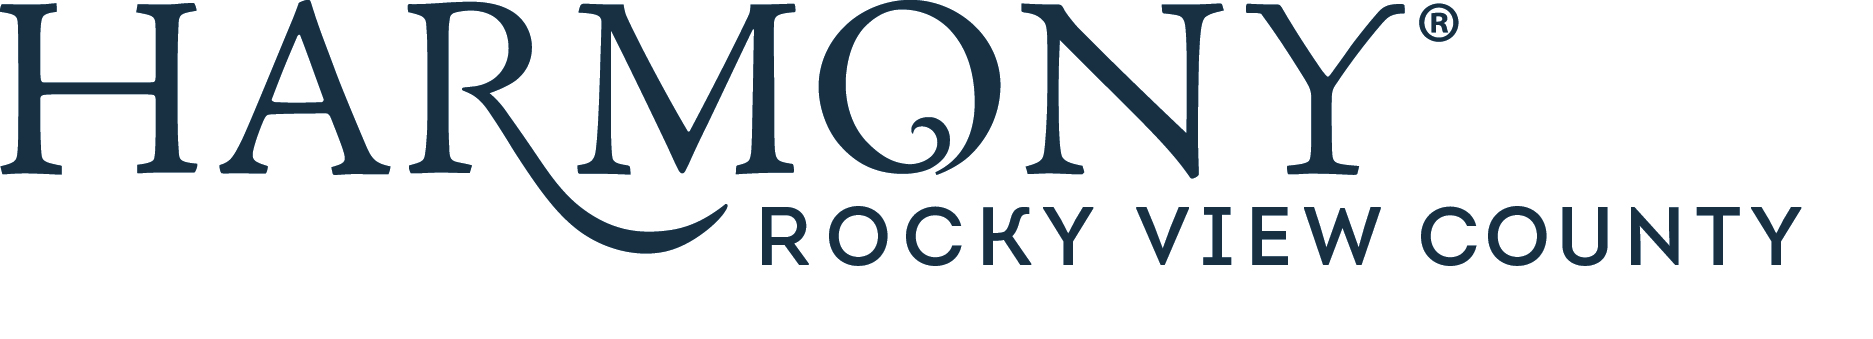 Harmony Rocky View County Logo